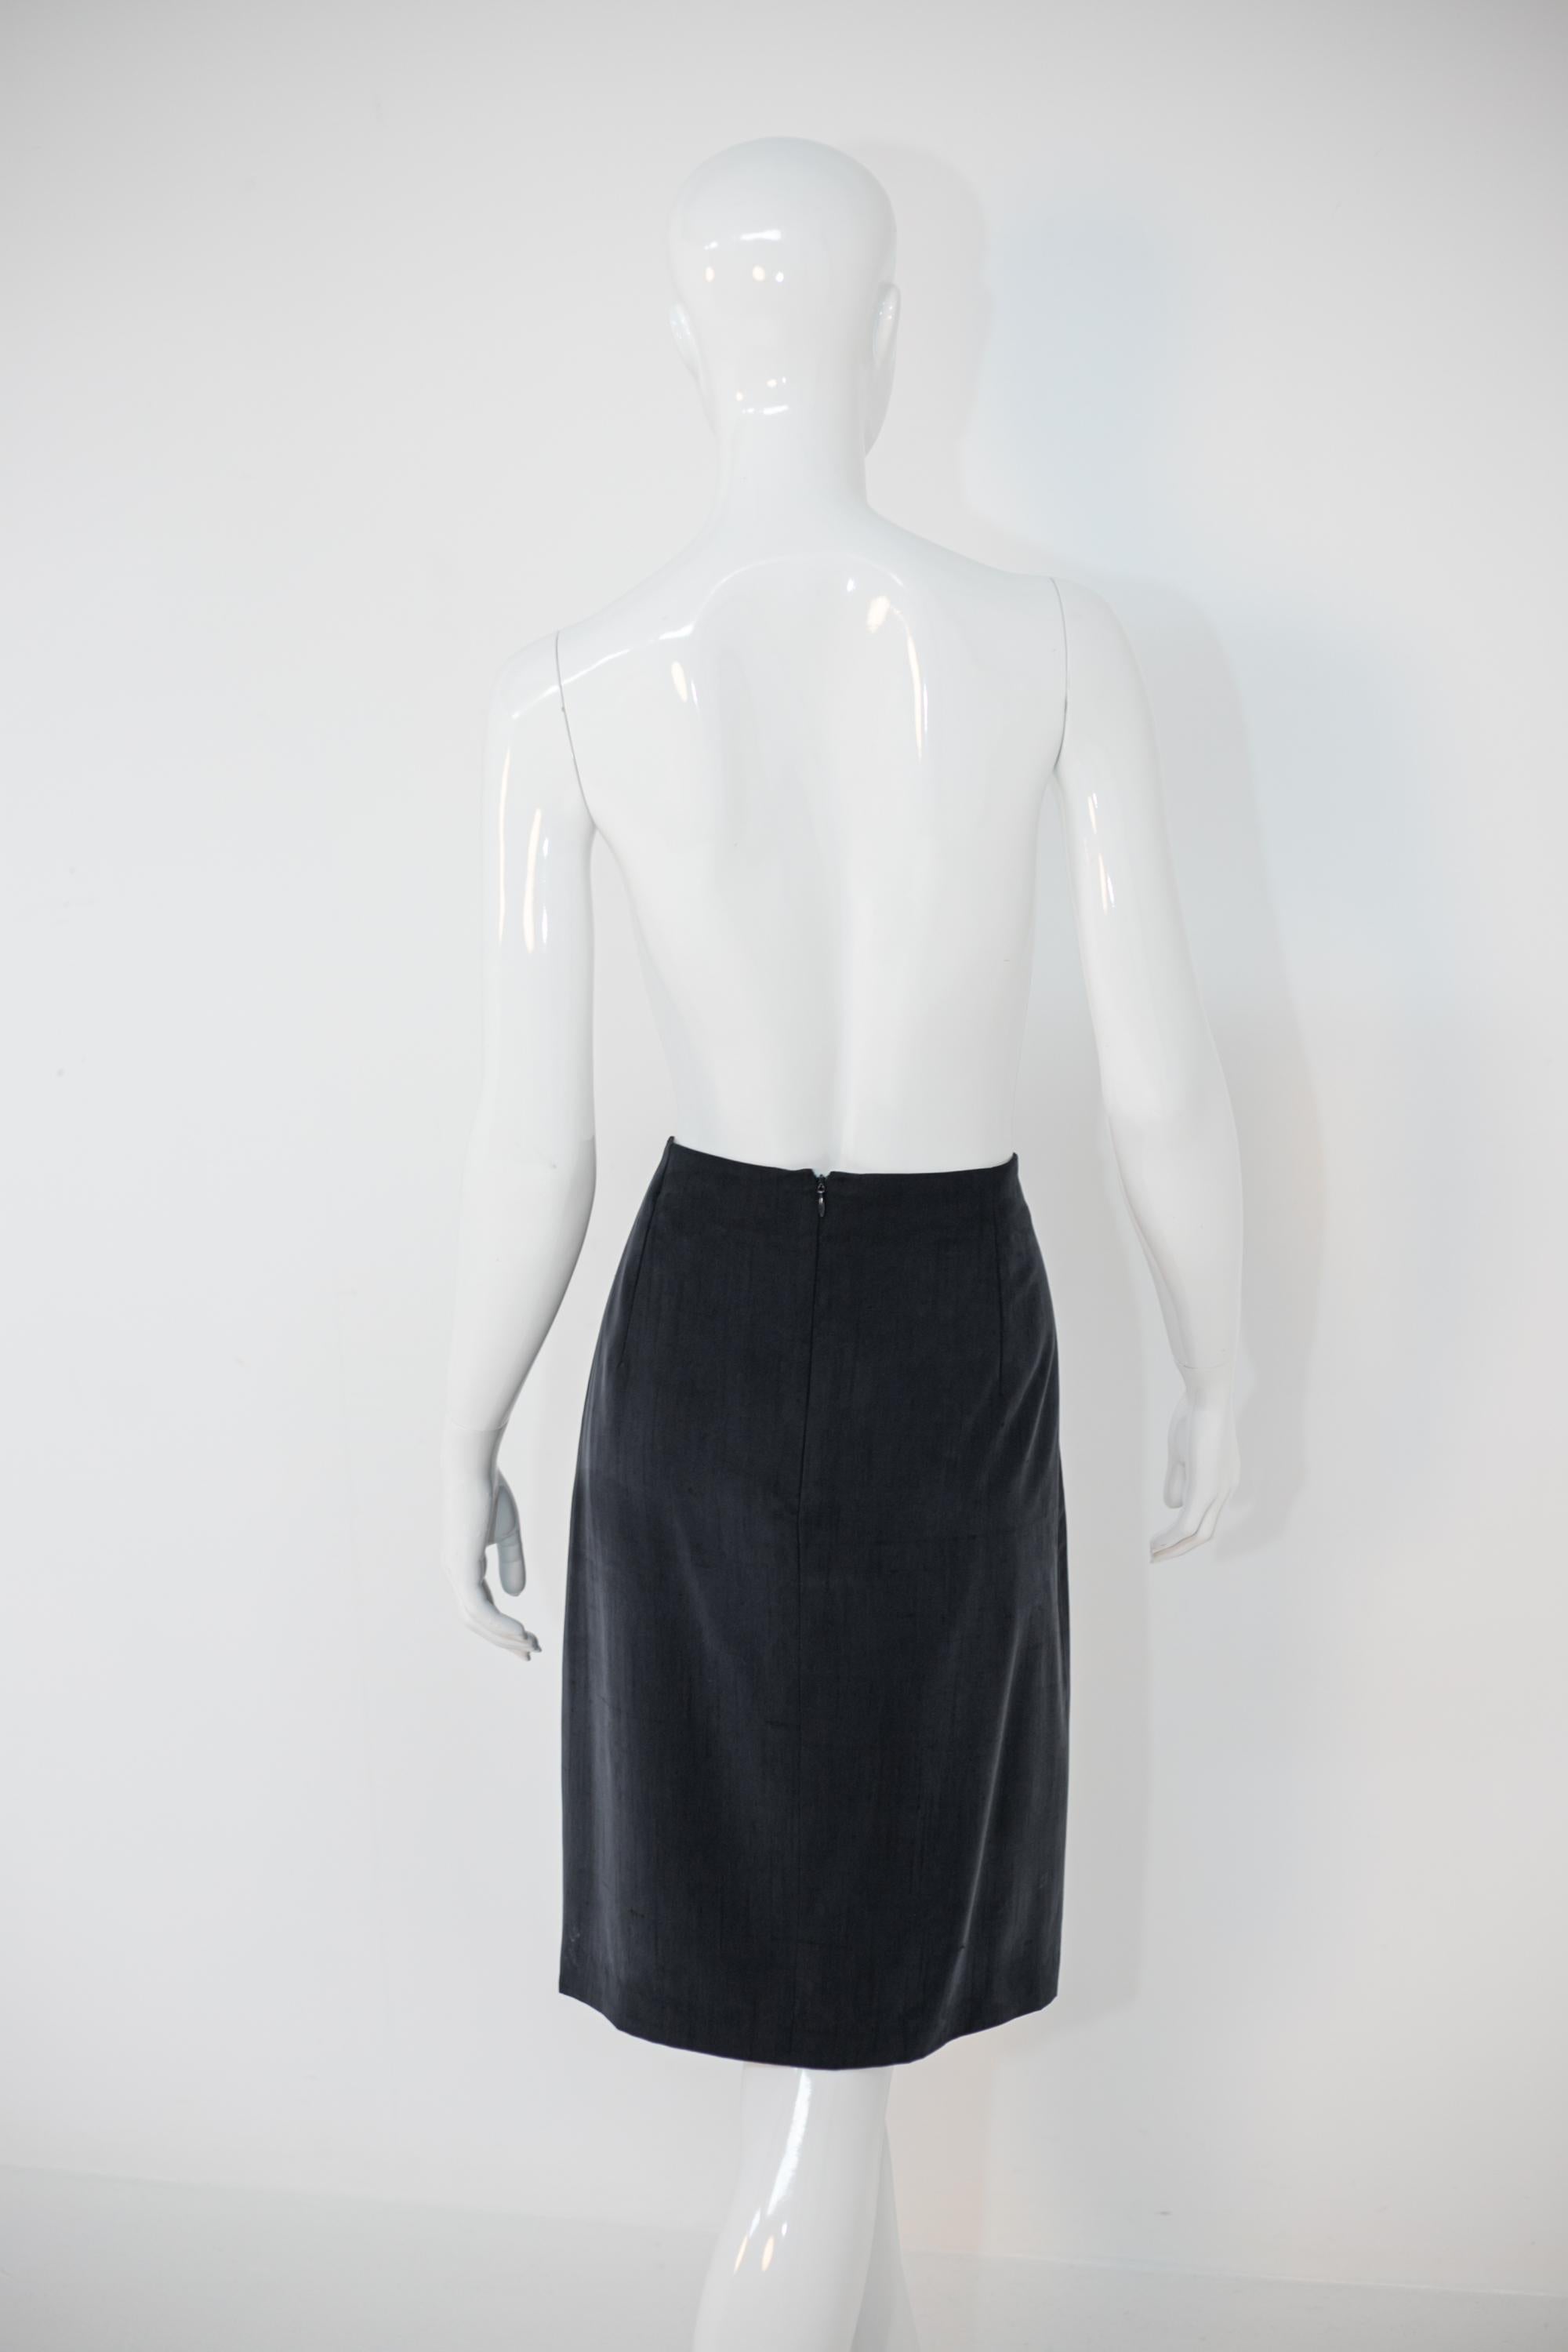 Gianni Versace Black Elegant Skirt Suit For Sale 6